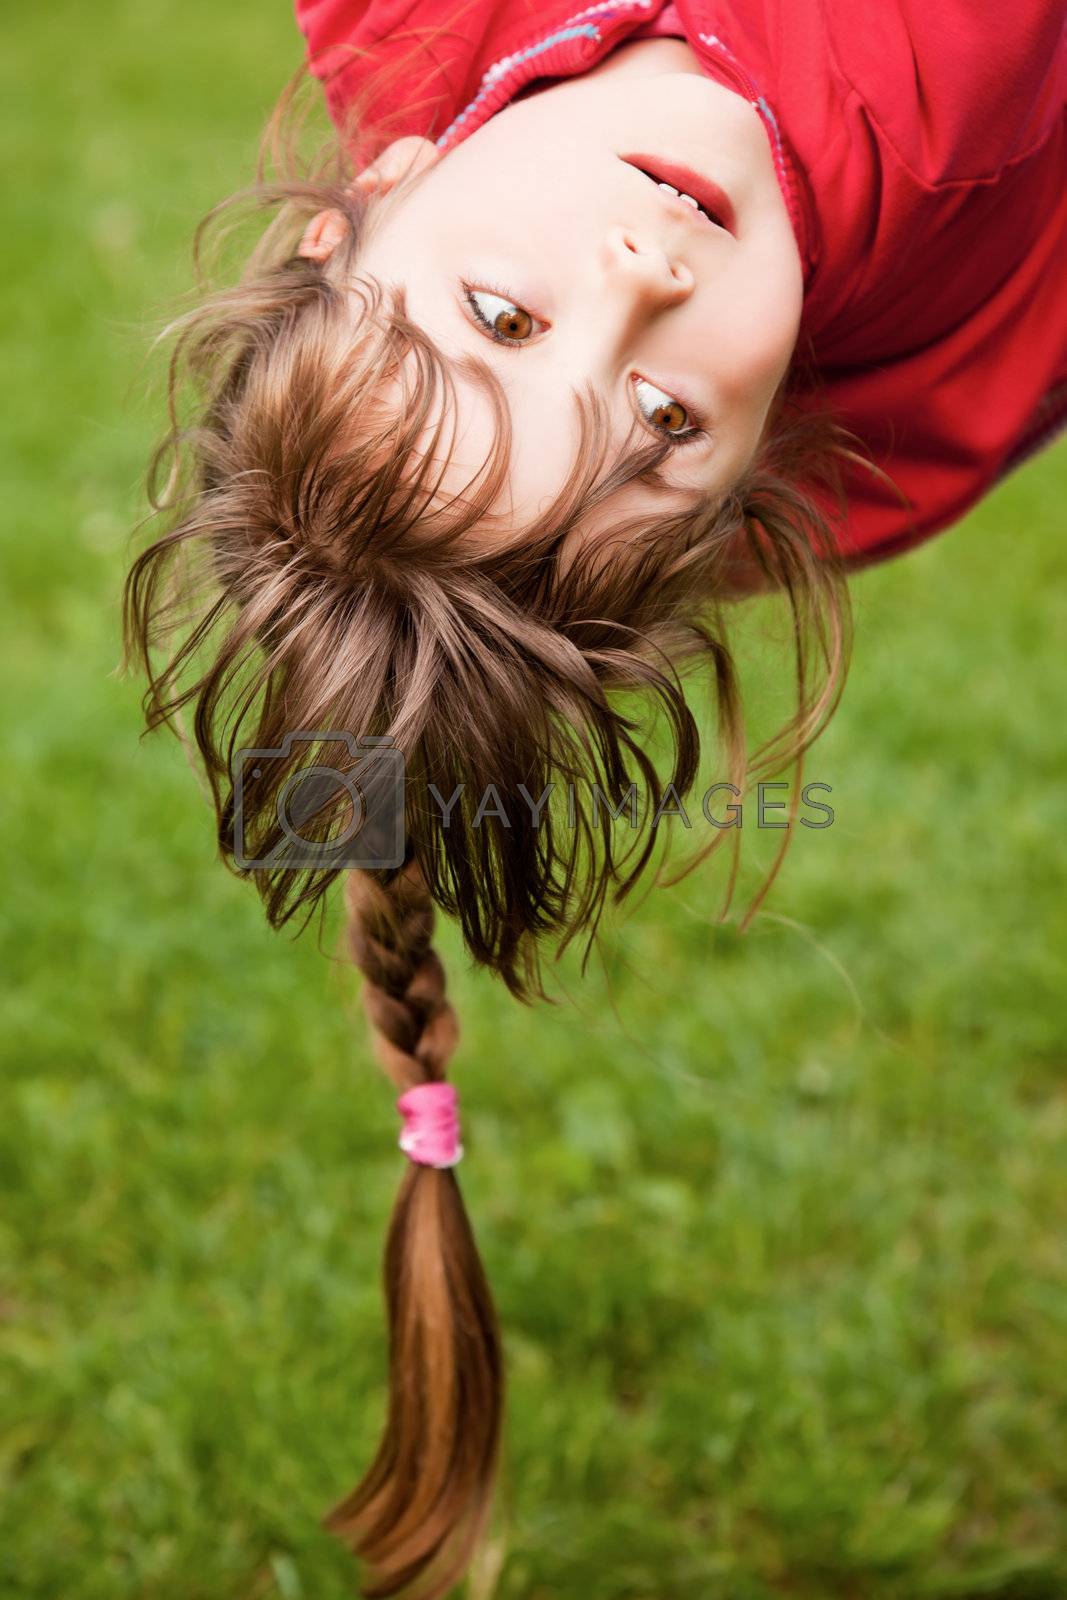 Caucasian girl hanging upside down in backyard - Stock 